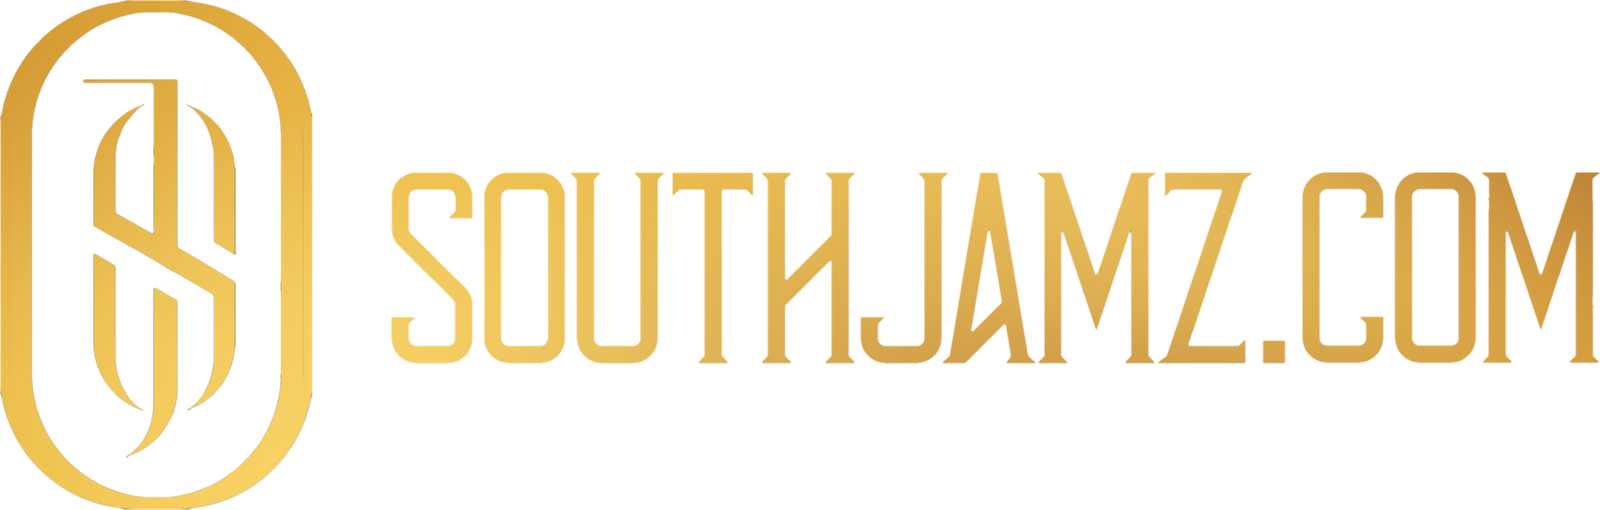 SouthJamz